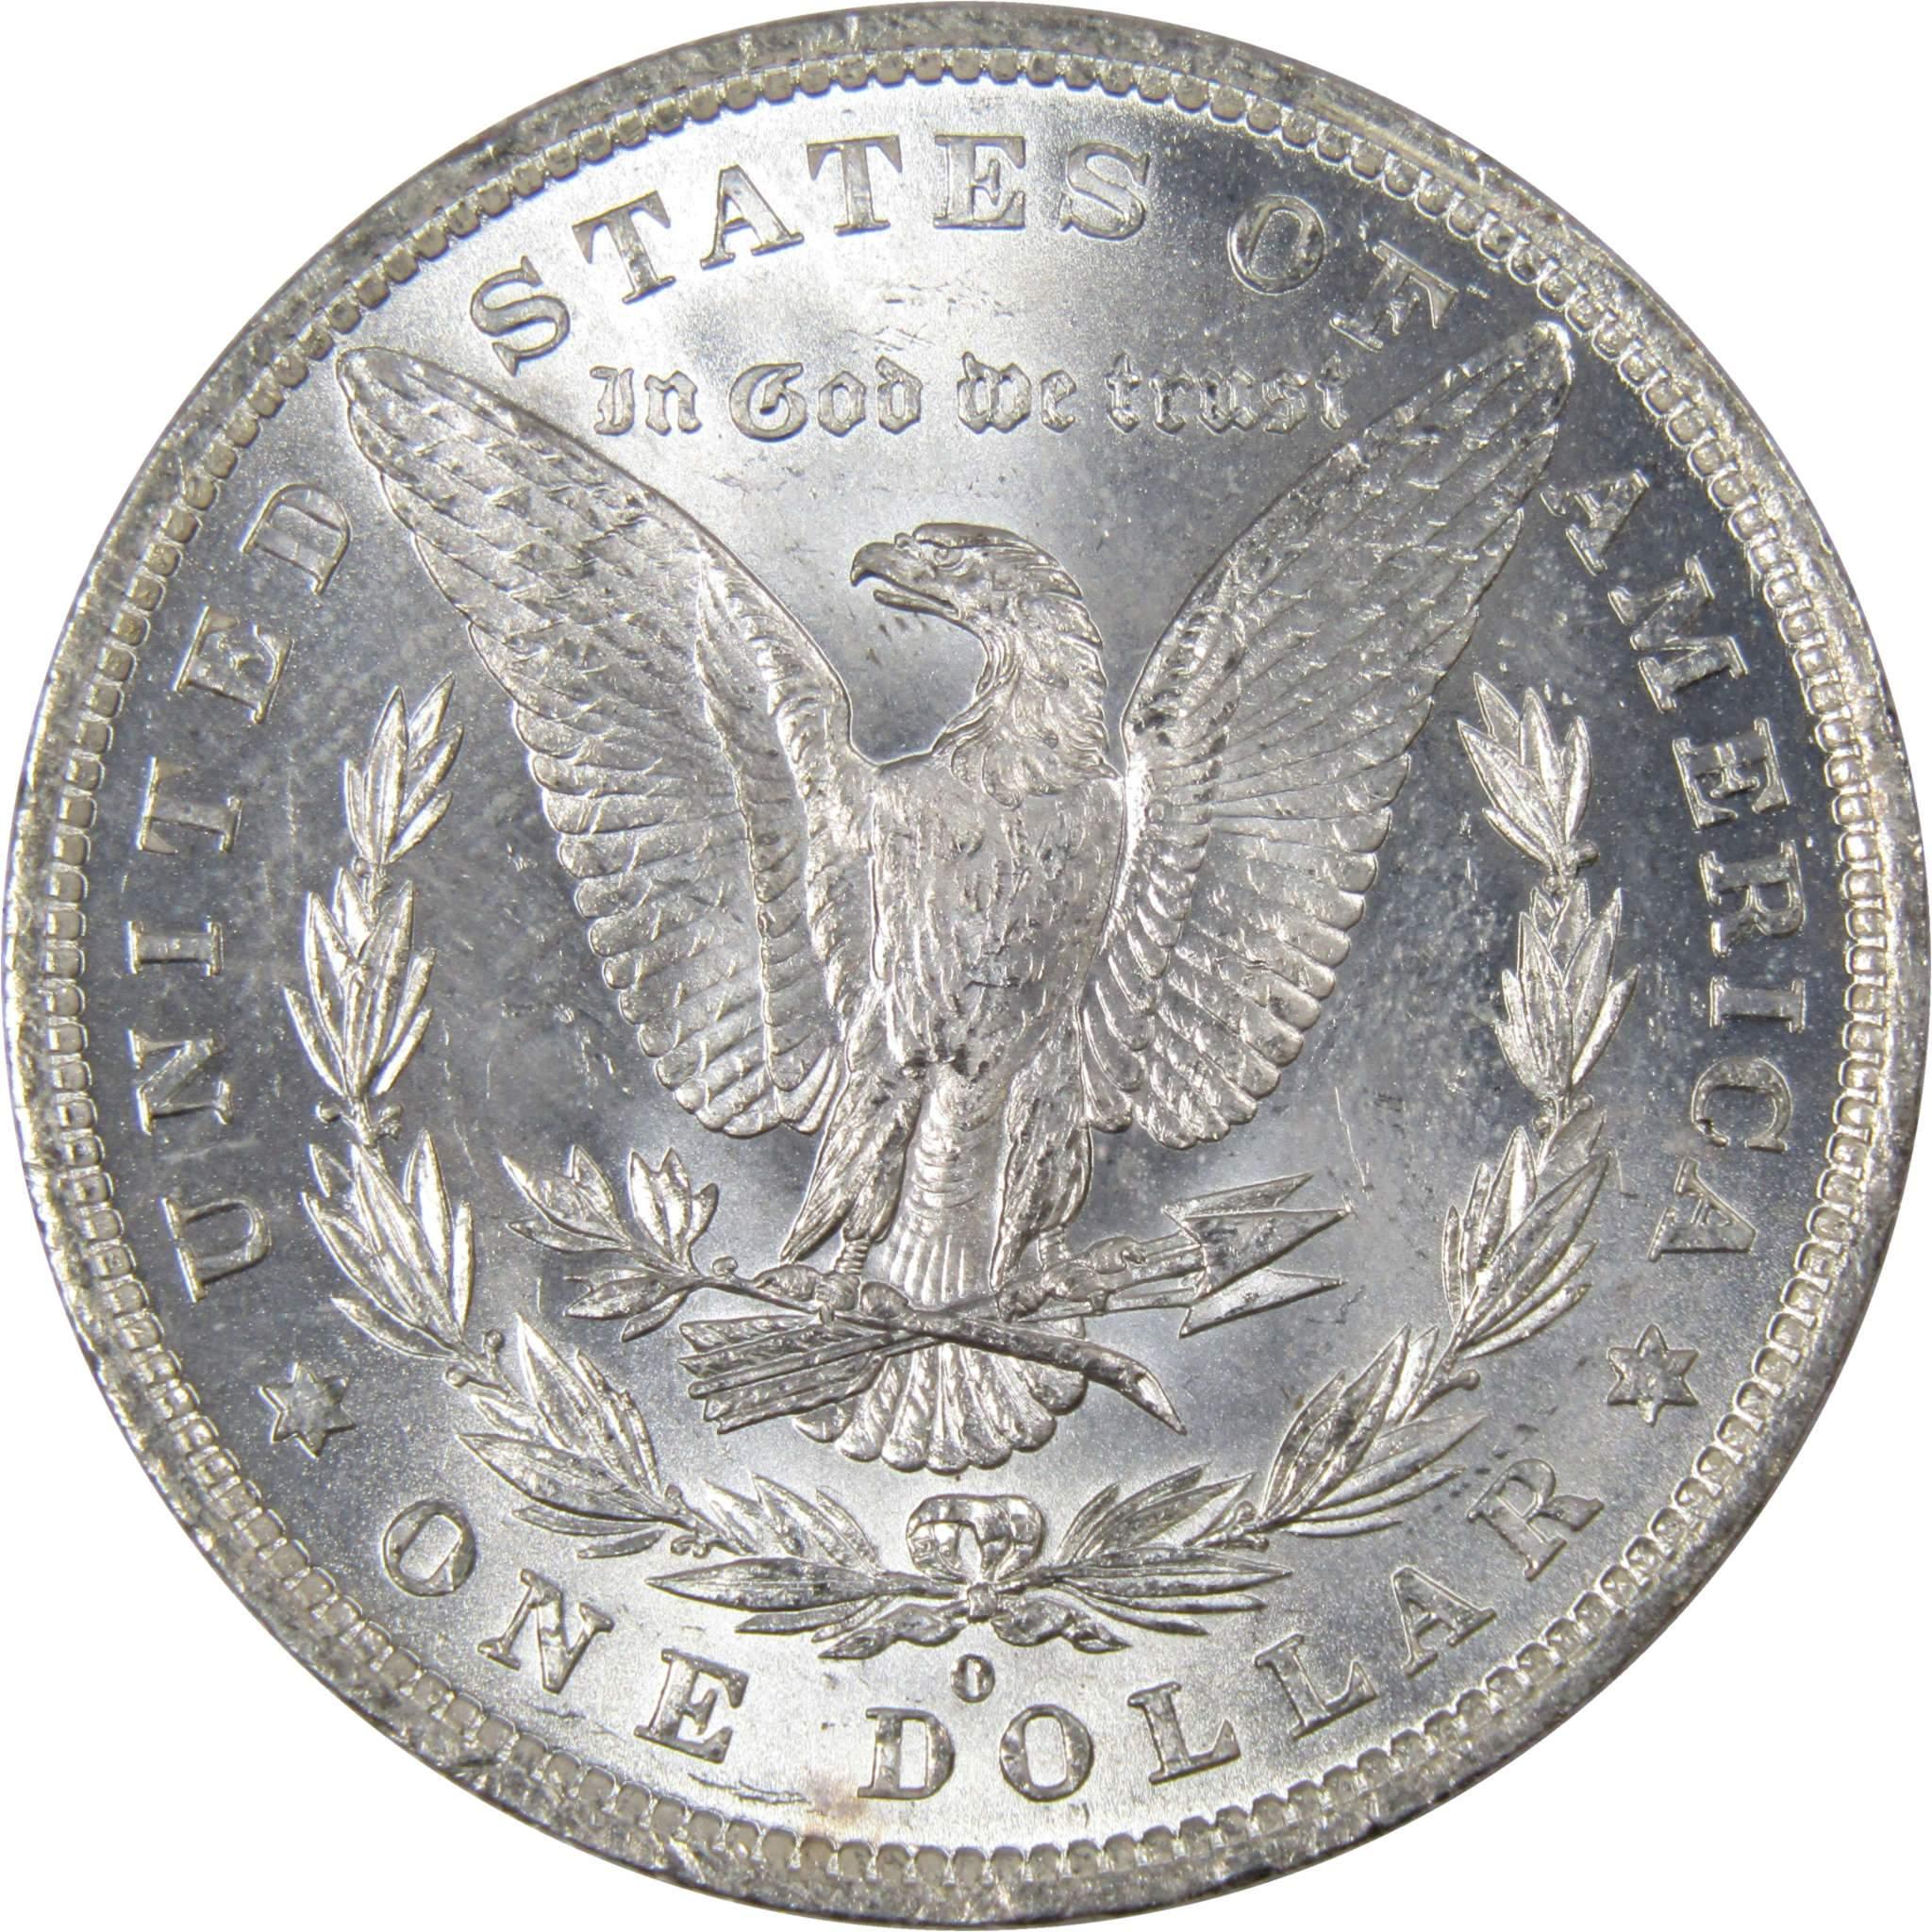 1881 O Morgan Dollar BU Uncirculated Mint State 90% Silver $1 US Coin - Morgan coin - Morgan silver dollar - Morgan silver dollar for sale - Profile Coins &amp; Collectibles